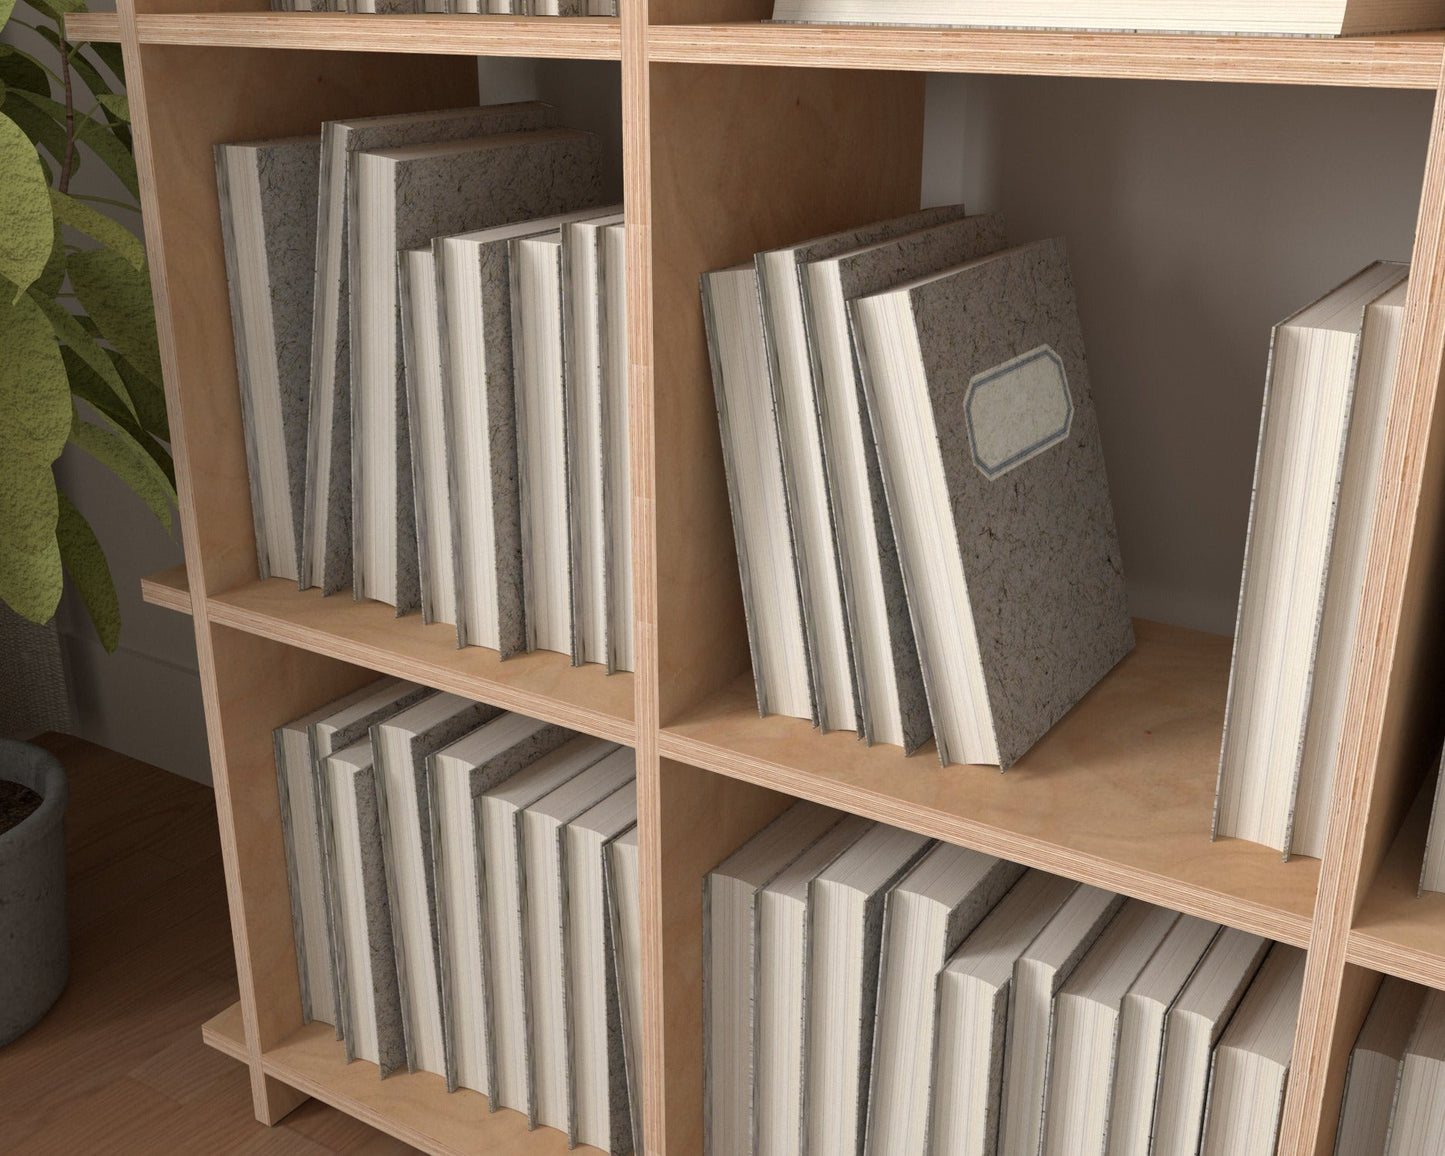 2x4 Modern Modular Plywood Bookshelf Kallax modules japandi design for vinyl records, books, music studio, home - 80x150x33cm / 32x59x13”